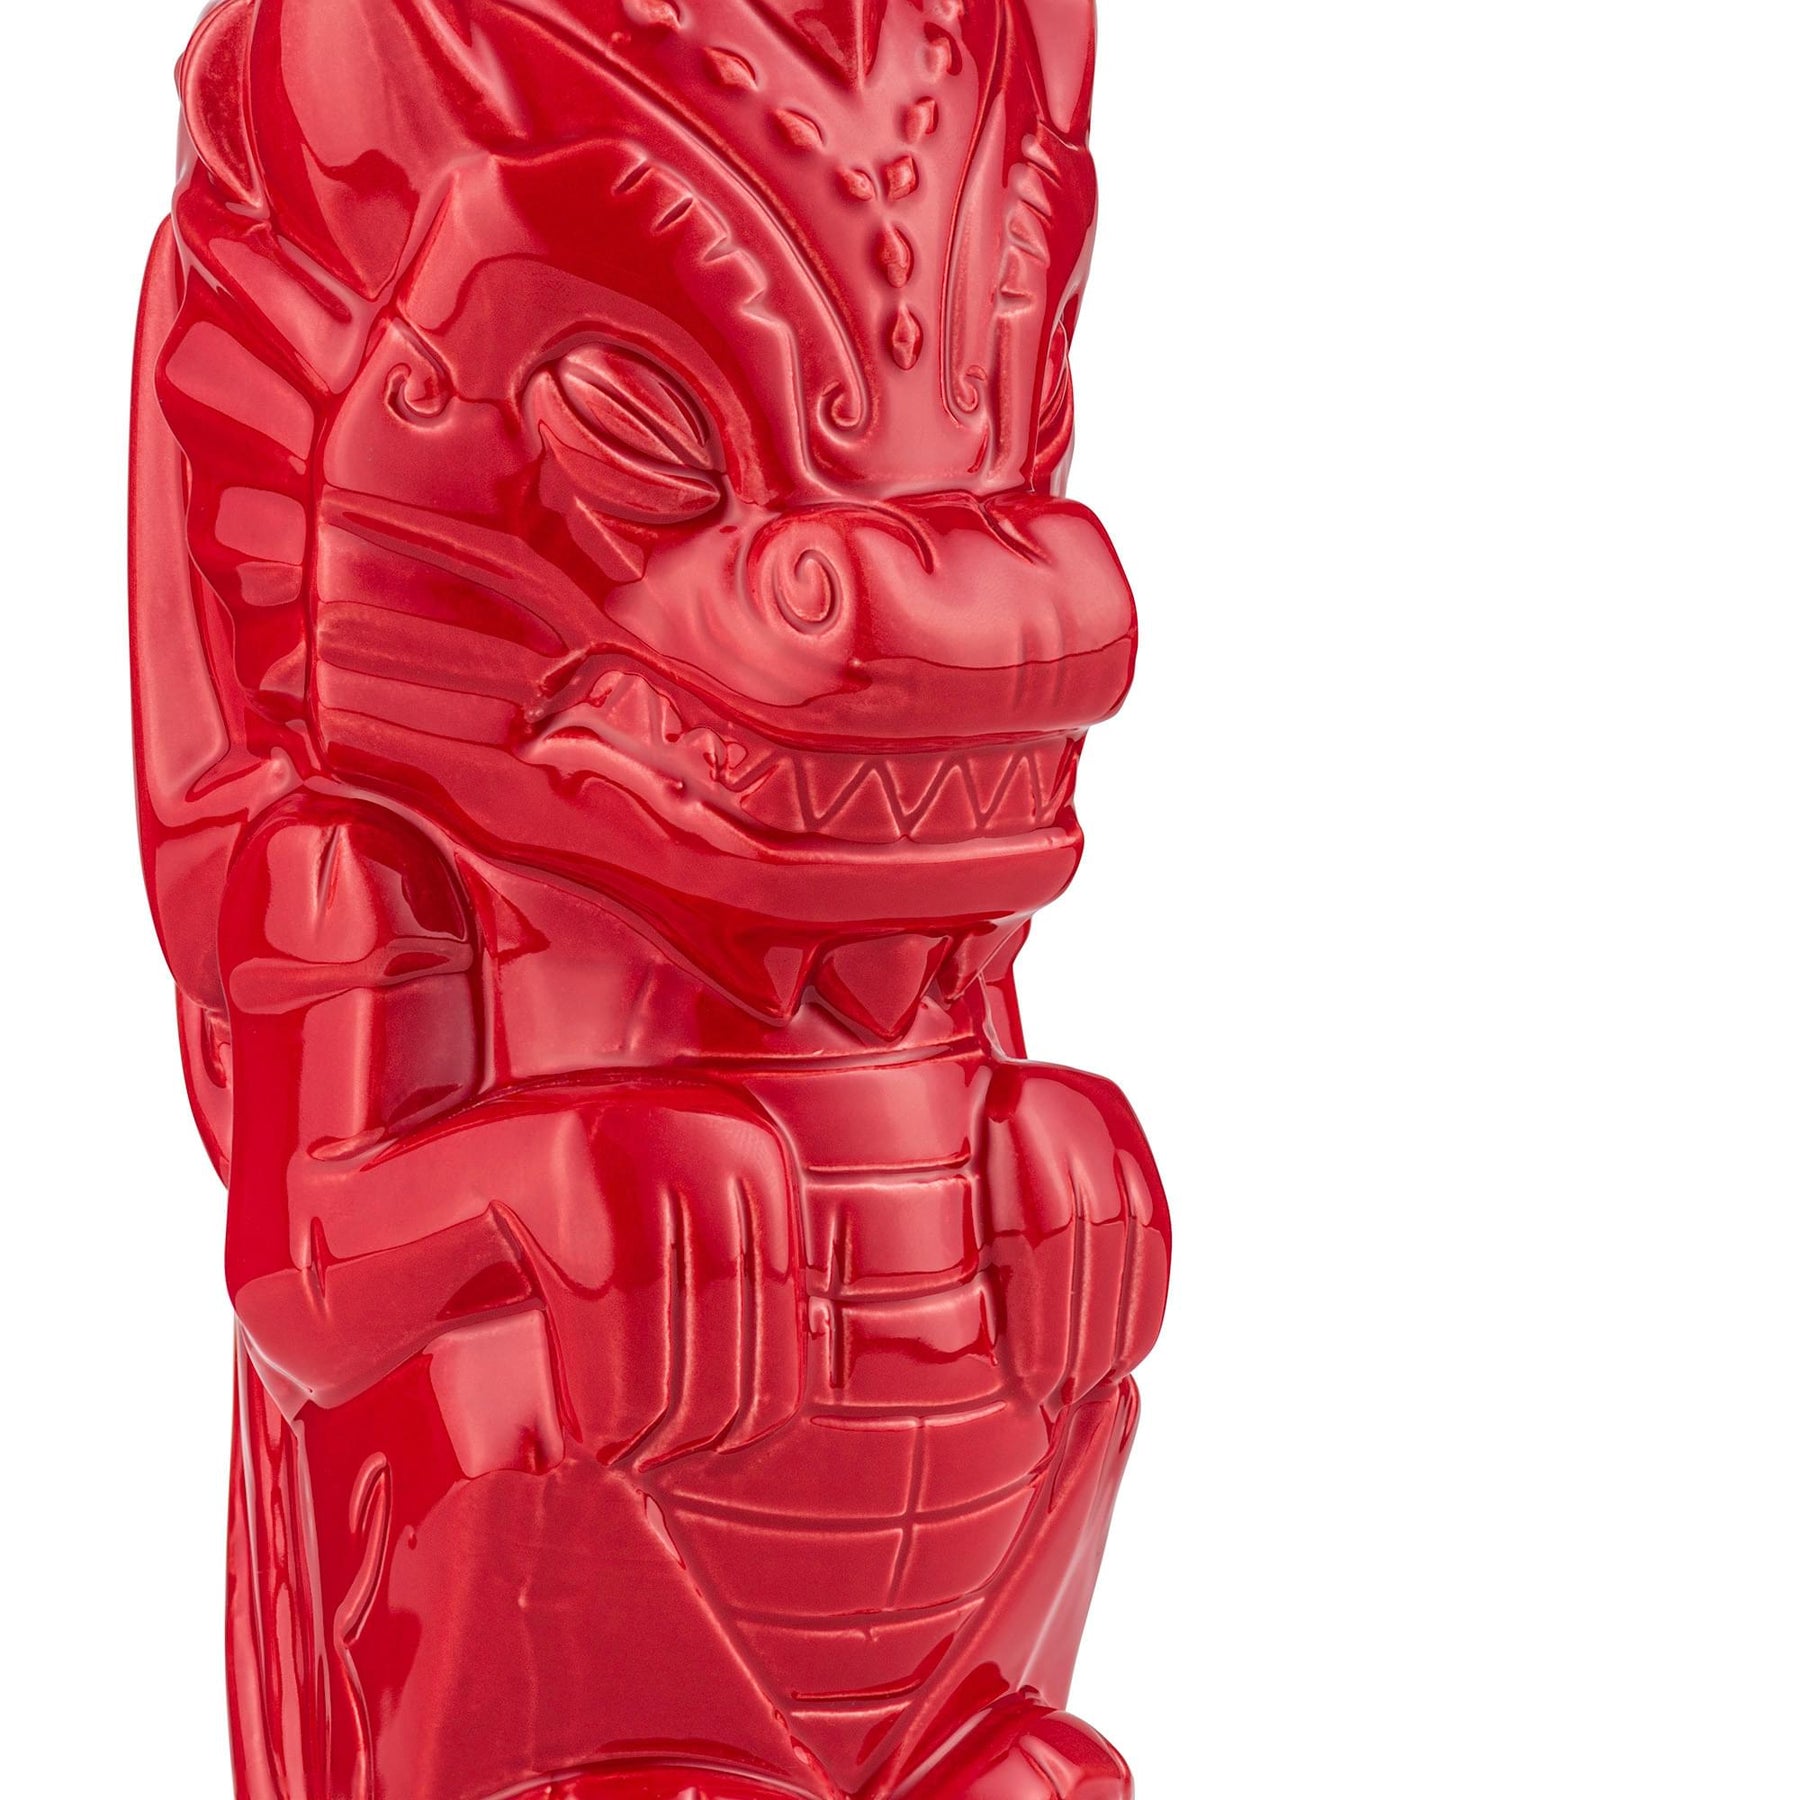 Geeki Tikis Red Dragon Fantasy Mug | Ceramic Tiki Style Cup | Holds 17 Ounces